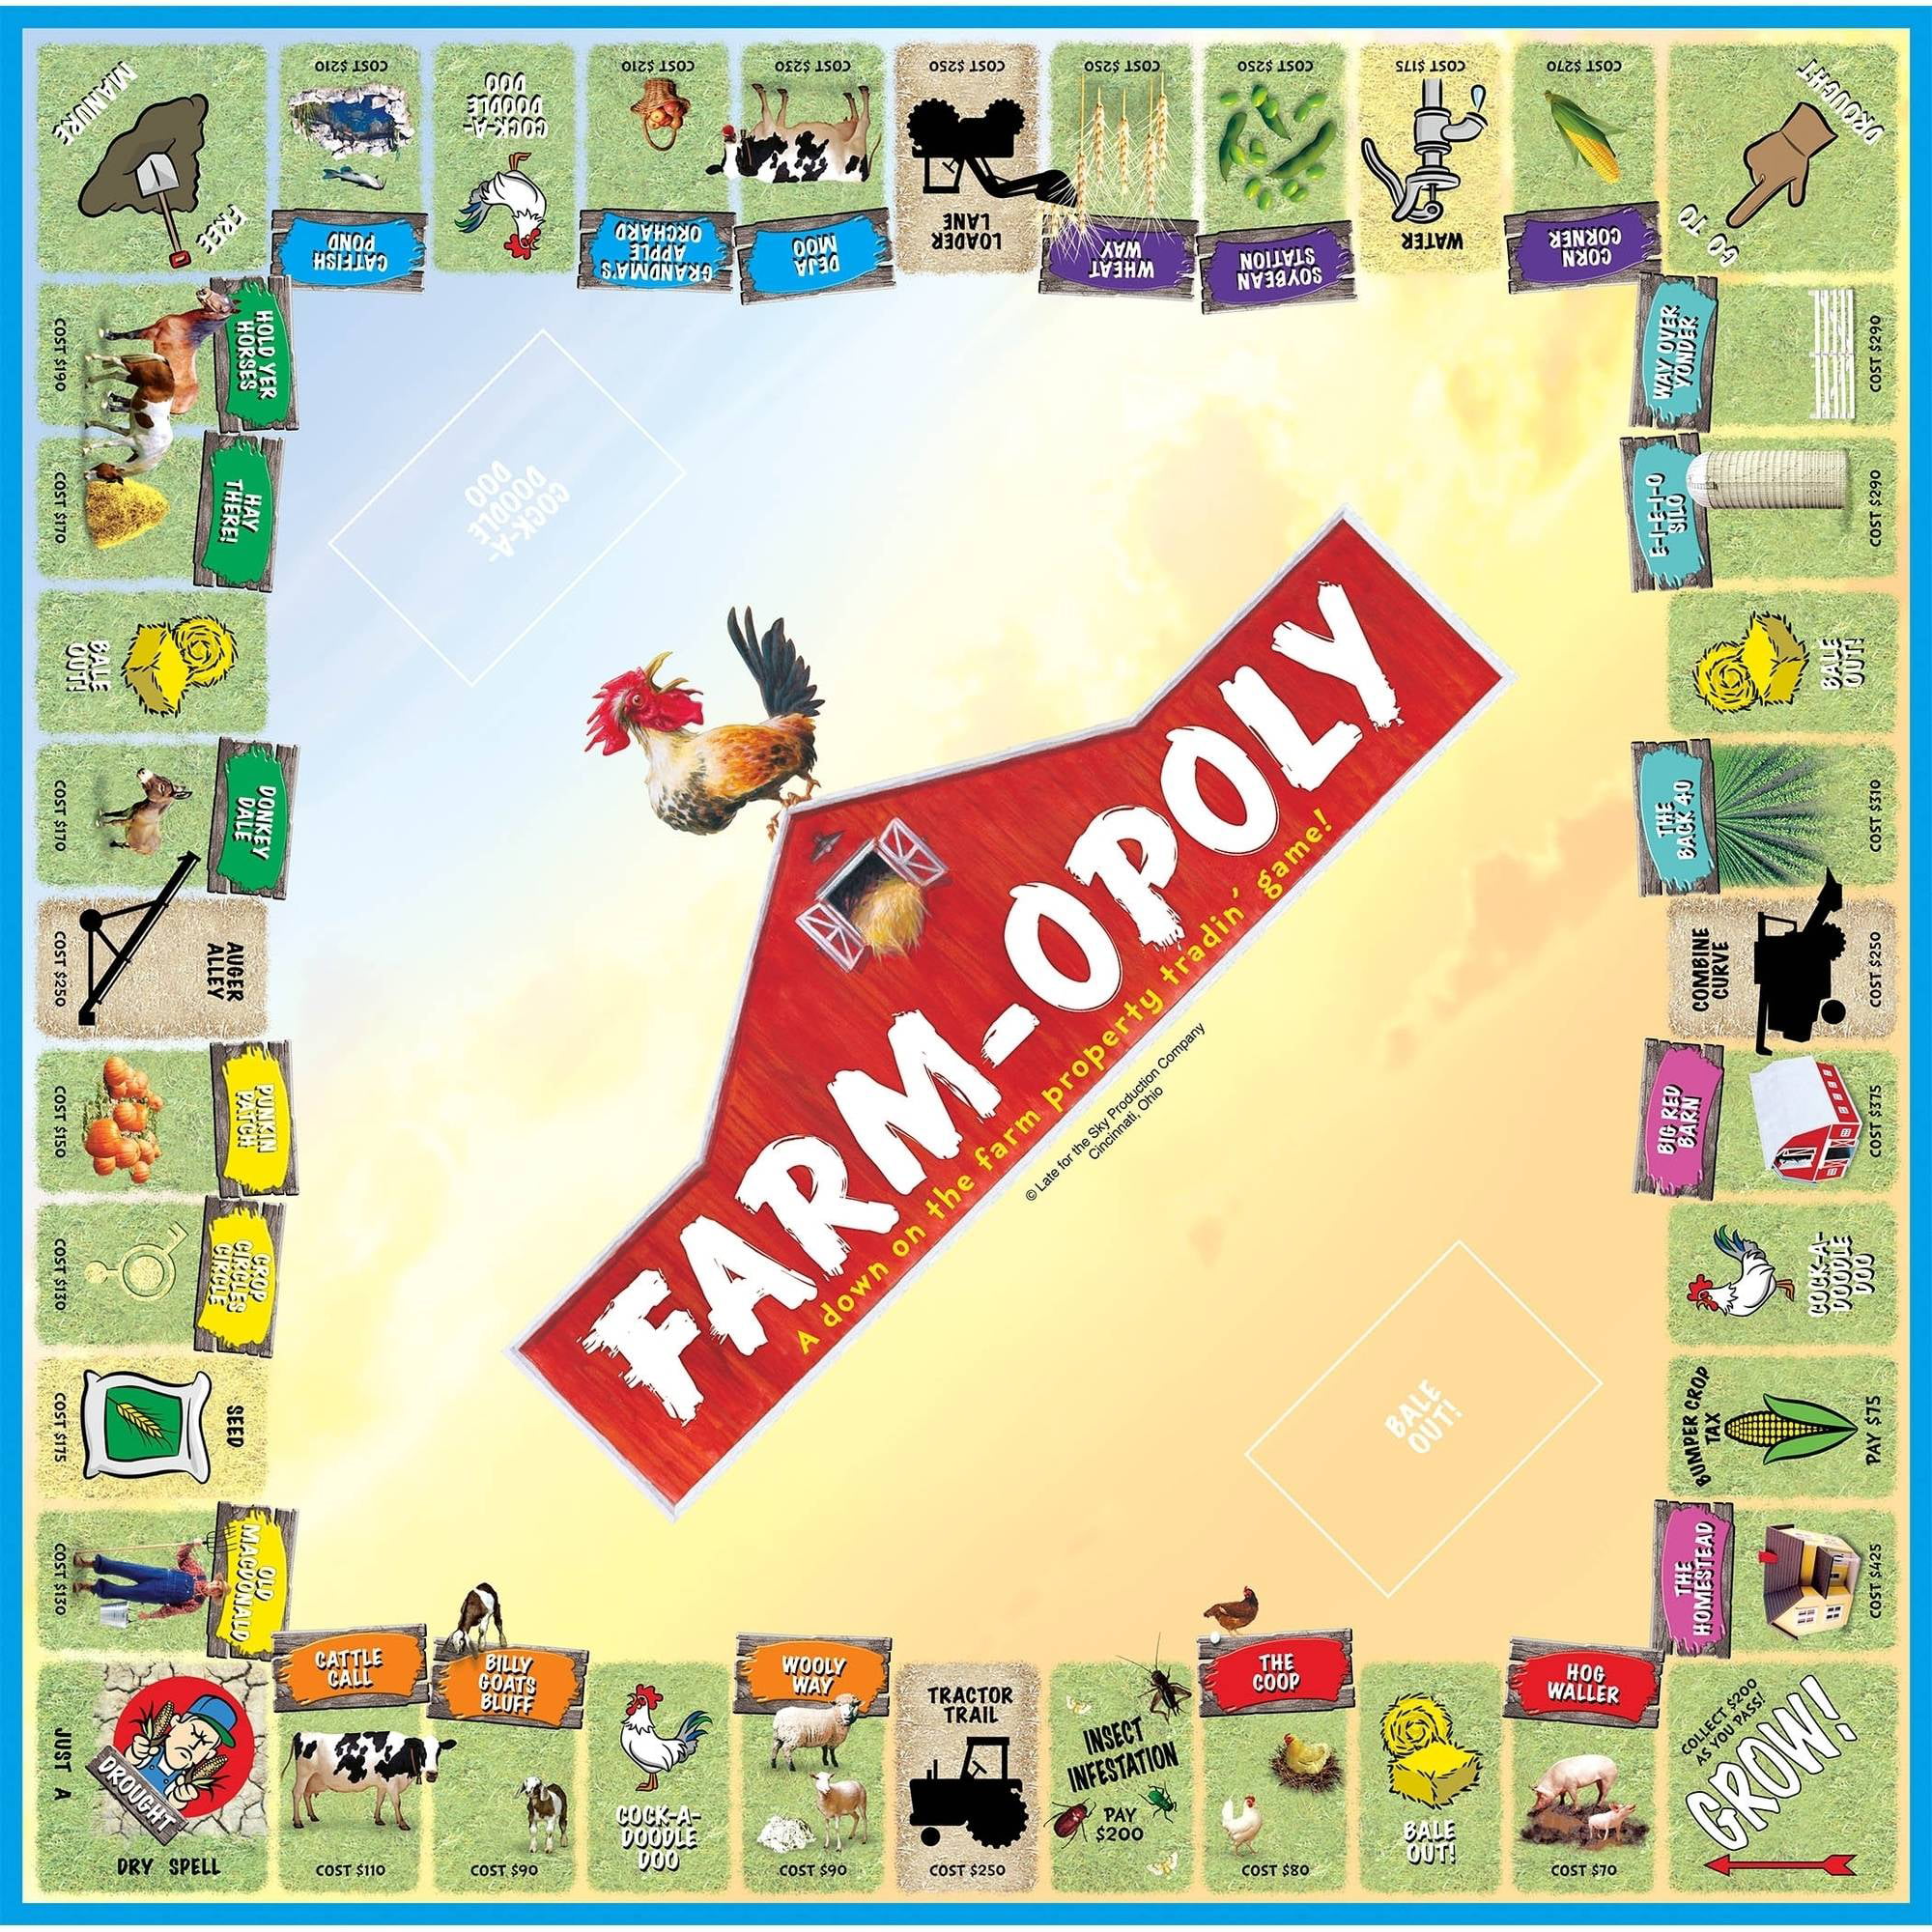 Monopoly style "FARM-OPOLY" Farmopoly Board Game.